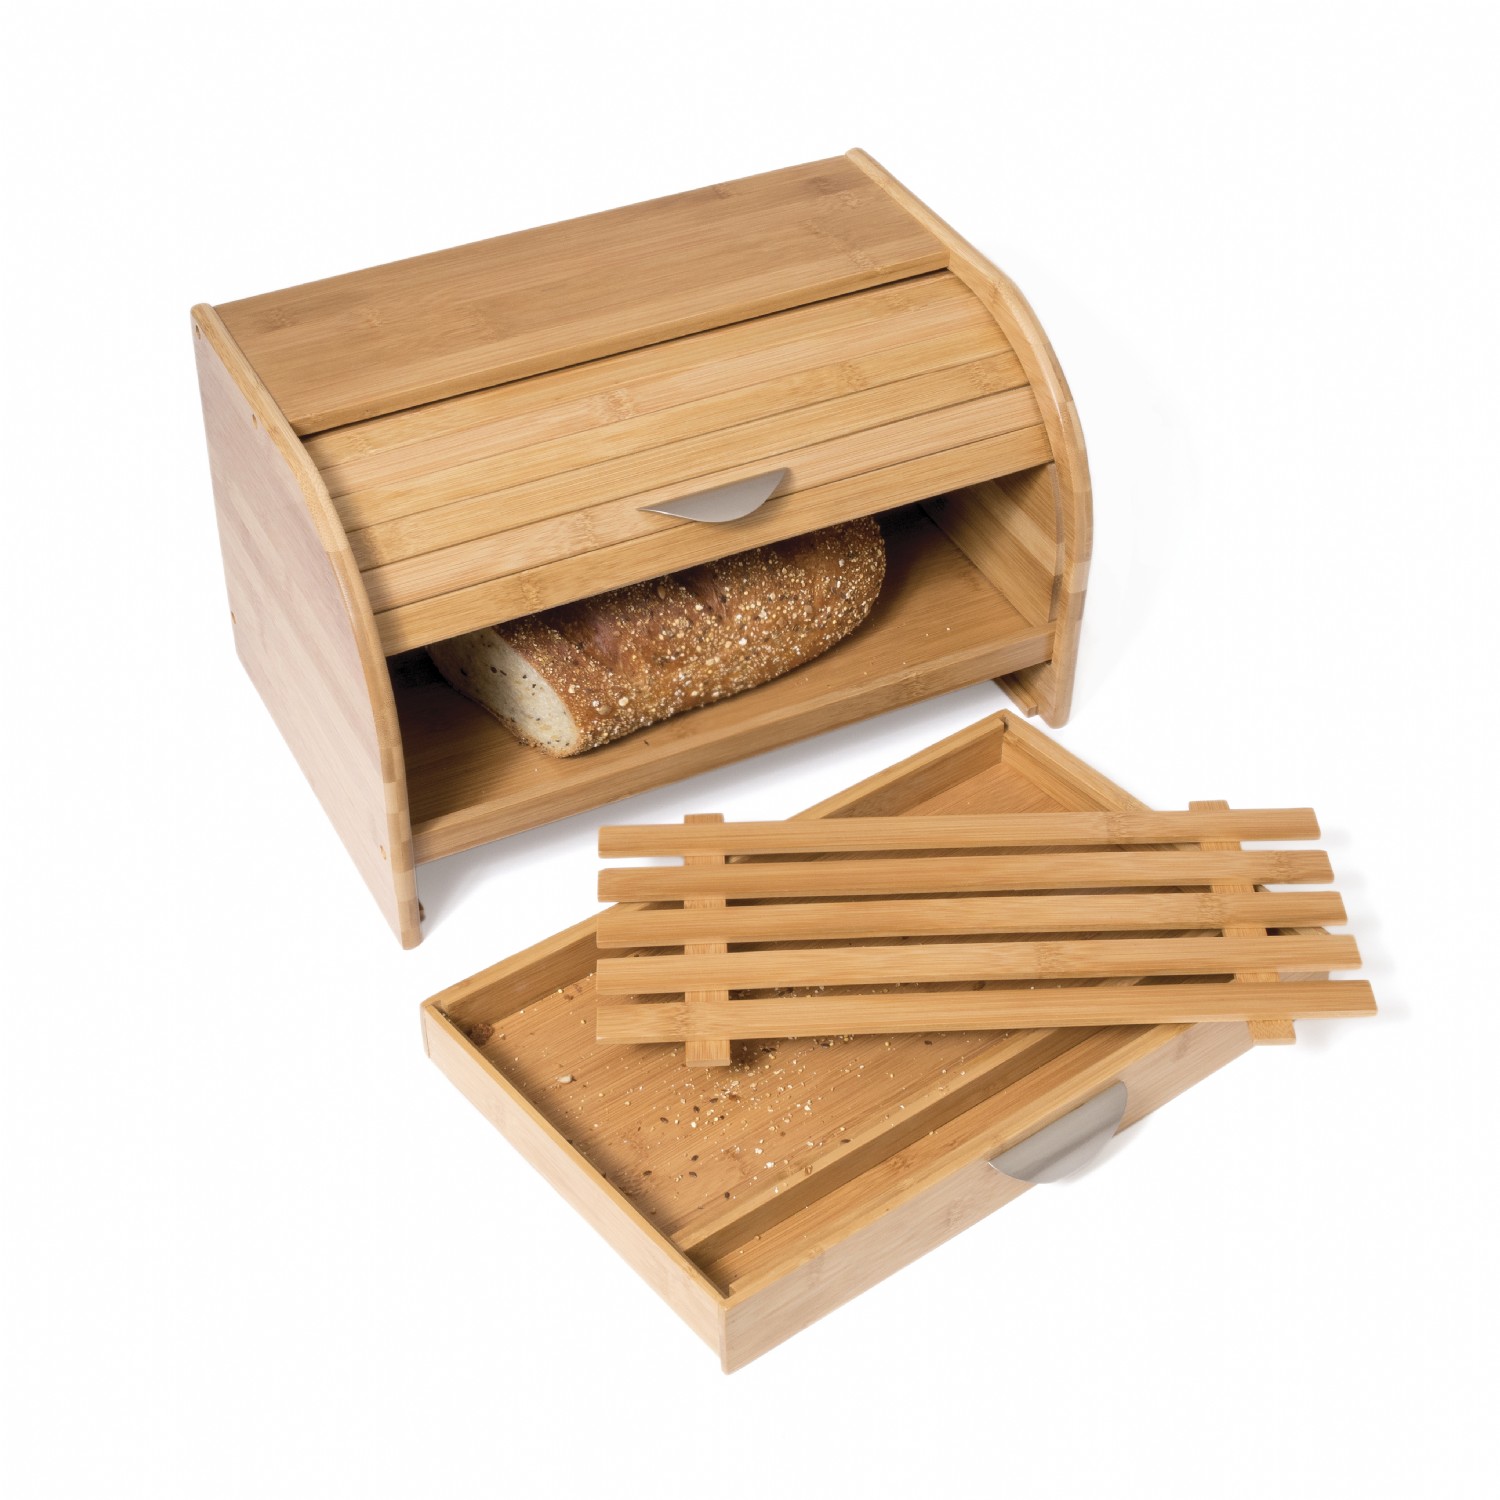 16" x 10-3/4" x 7" Lipper International 1146 Acacia Wood Rolltop Bread Box 